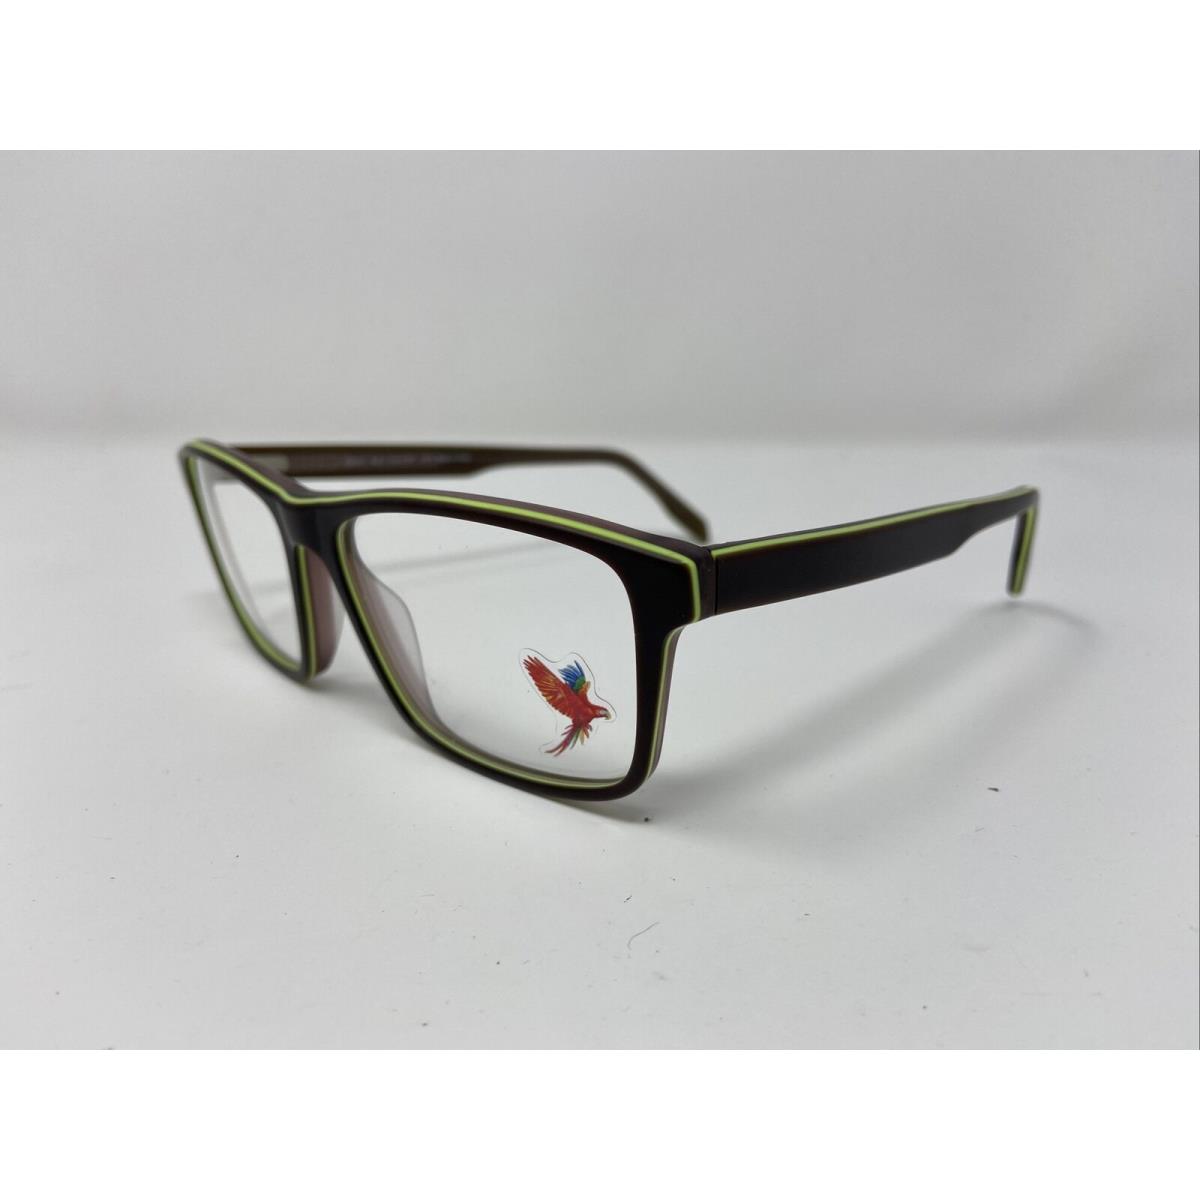 Maui Jim eyeglasses  - Multicolor Frame 0